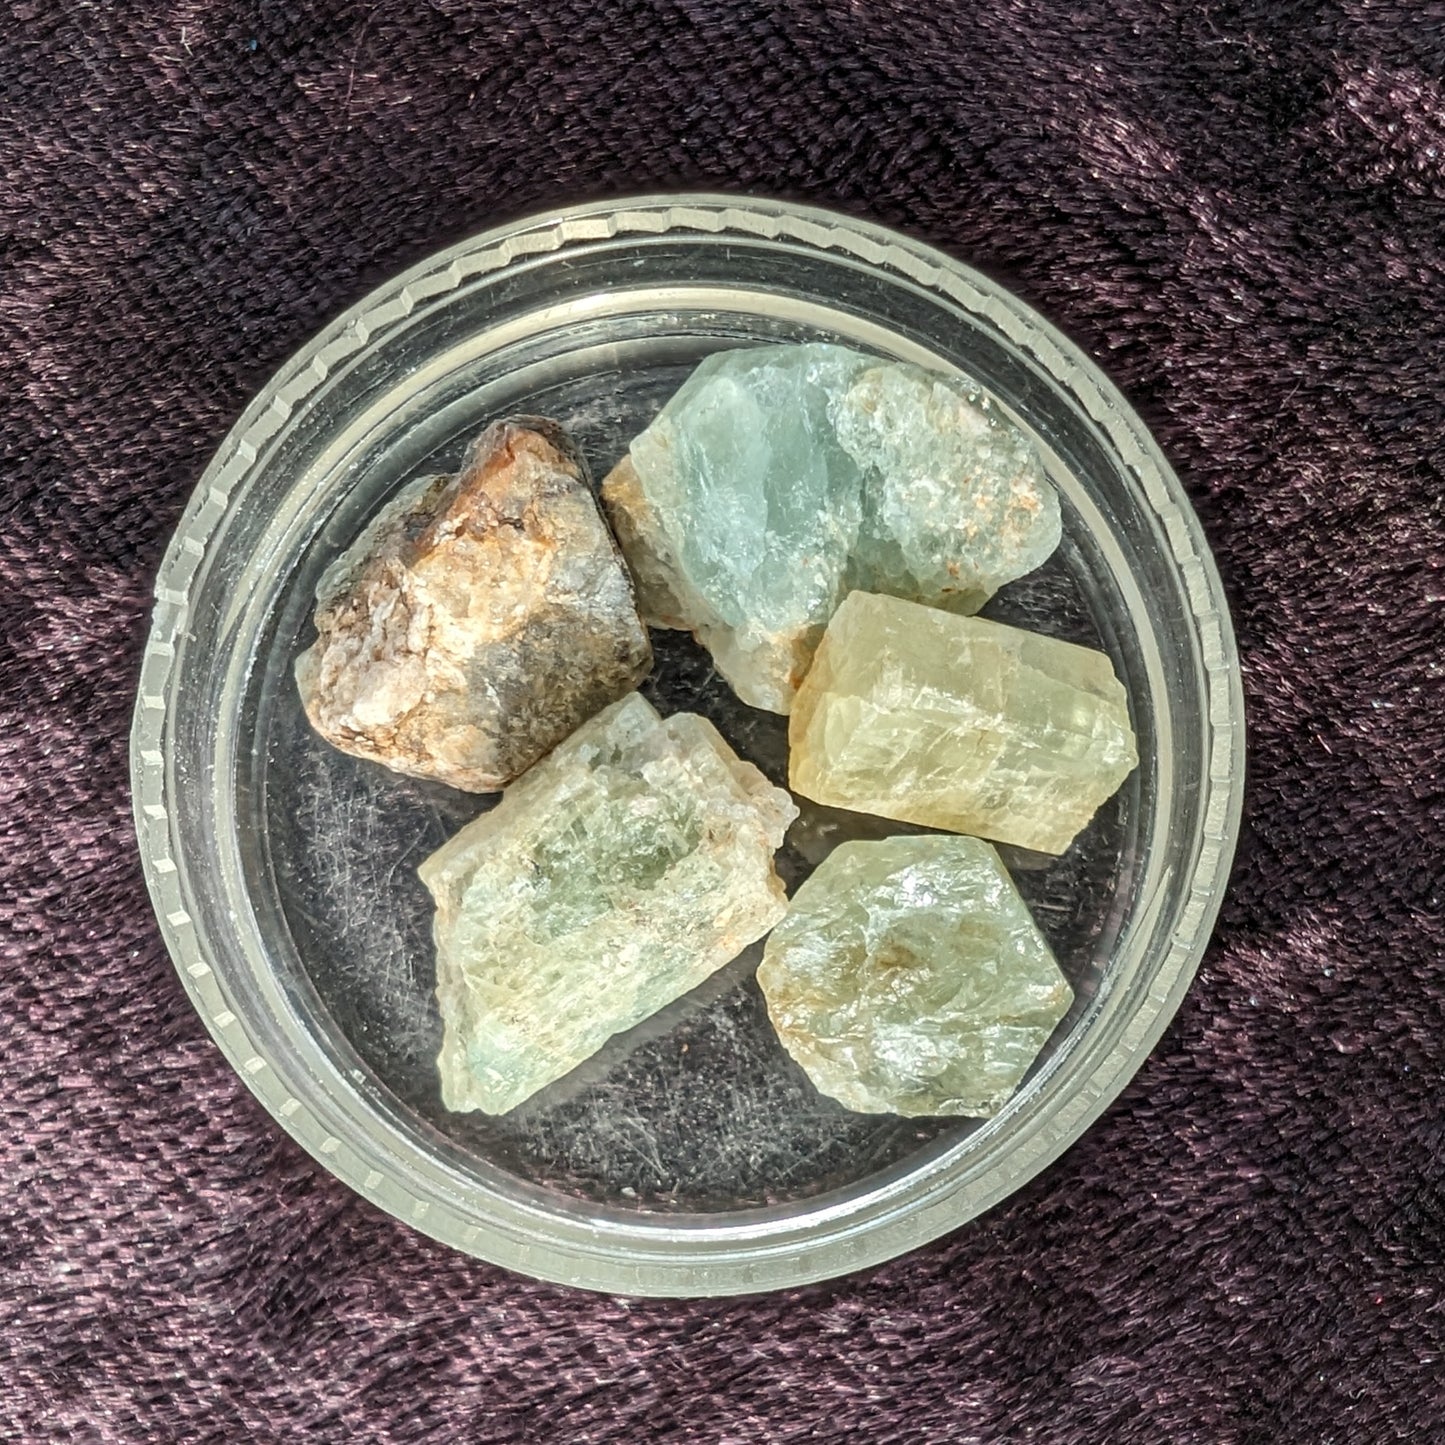 Aquamarine natural 4-6 crystals 7-8g